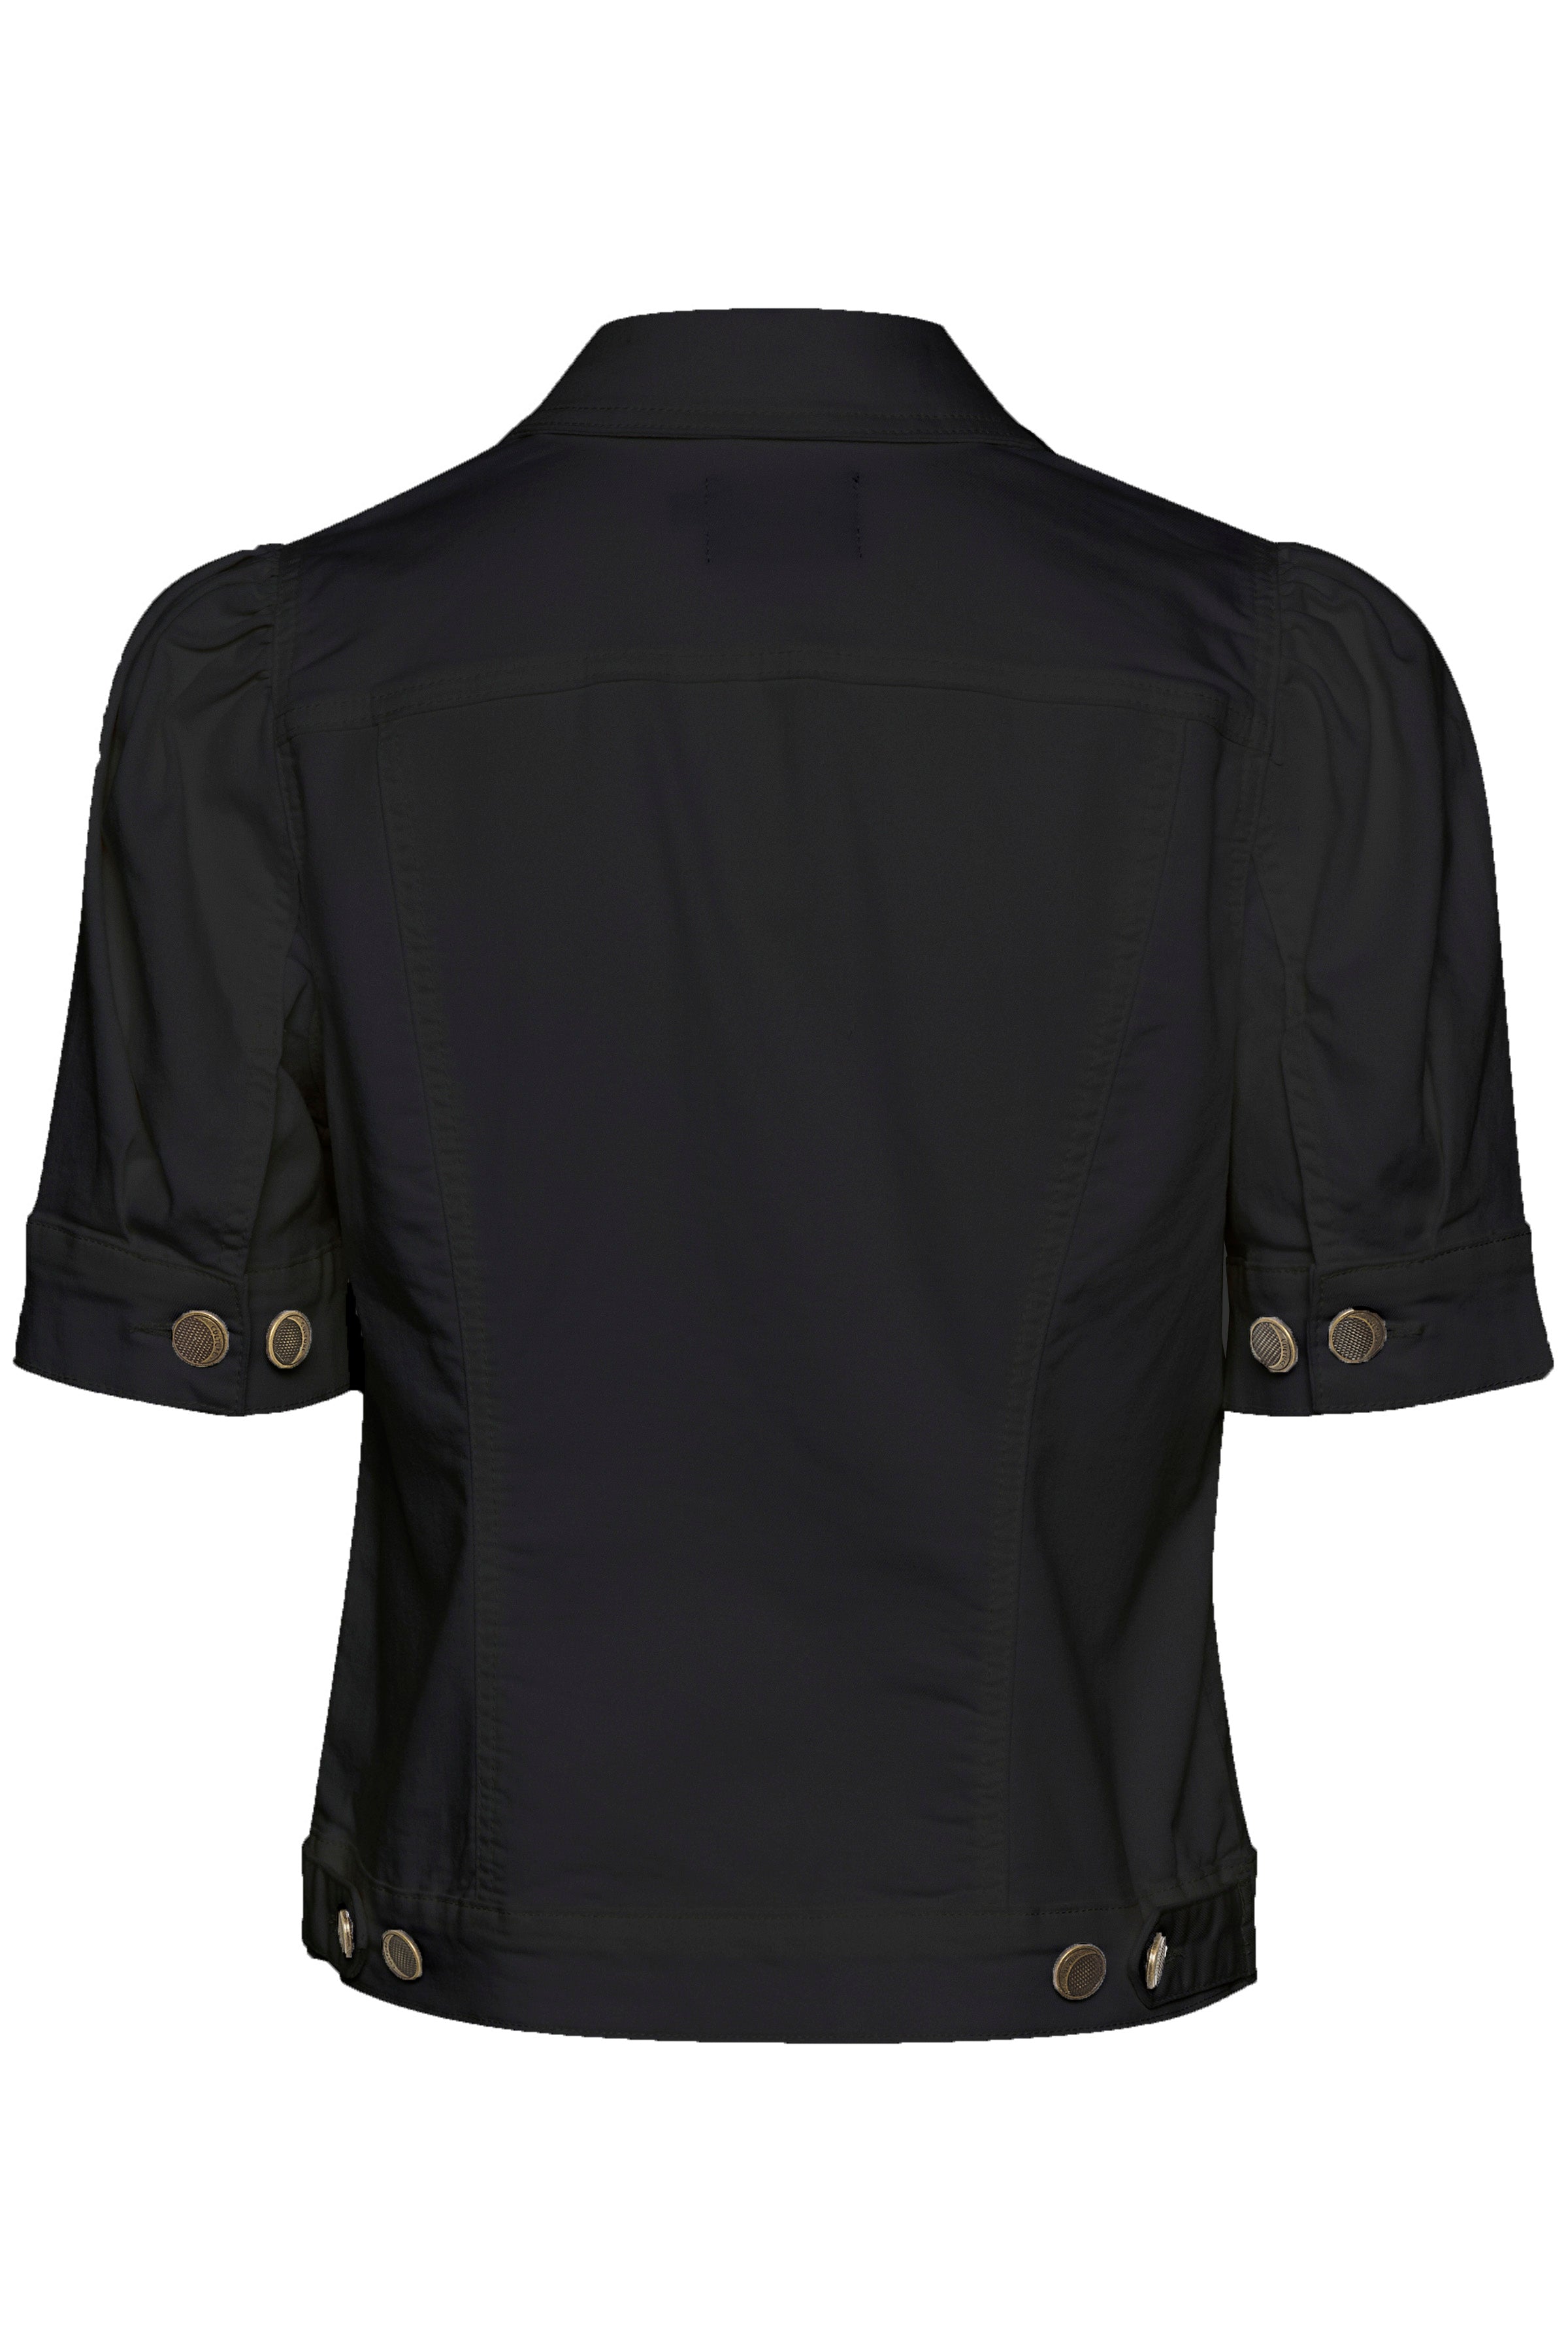 Bentha Short Sleeve Jacket in Black